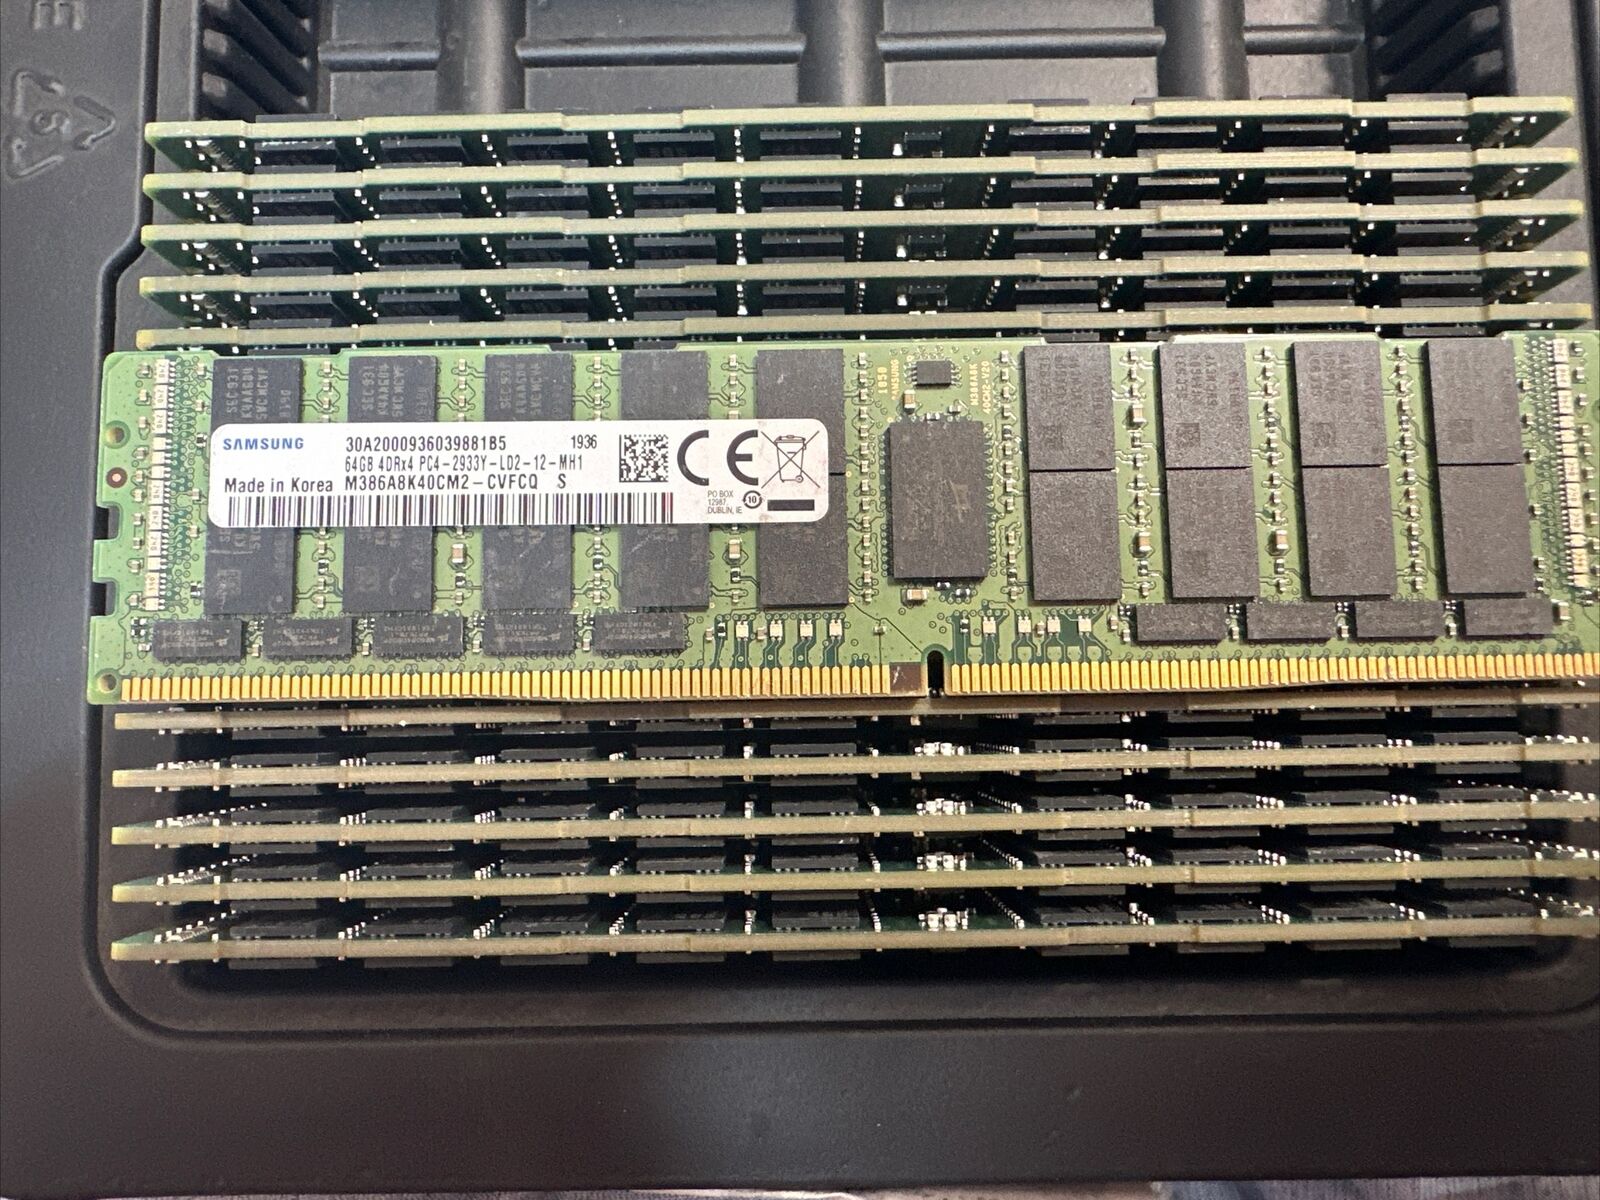 Samsung 64GB 4DRx4 PC4-2933 LRDIMM DDR4-23400 ECC Load Reduced Server Memory RAM